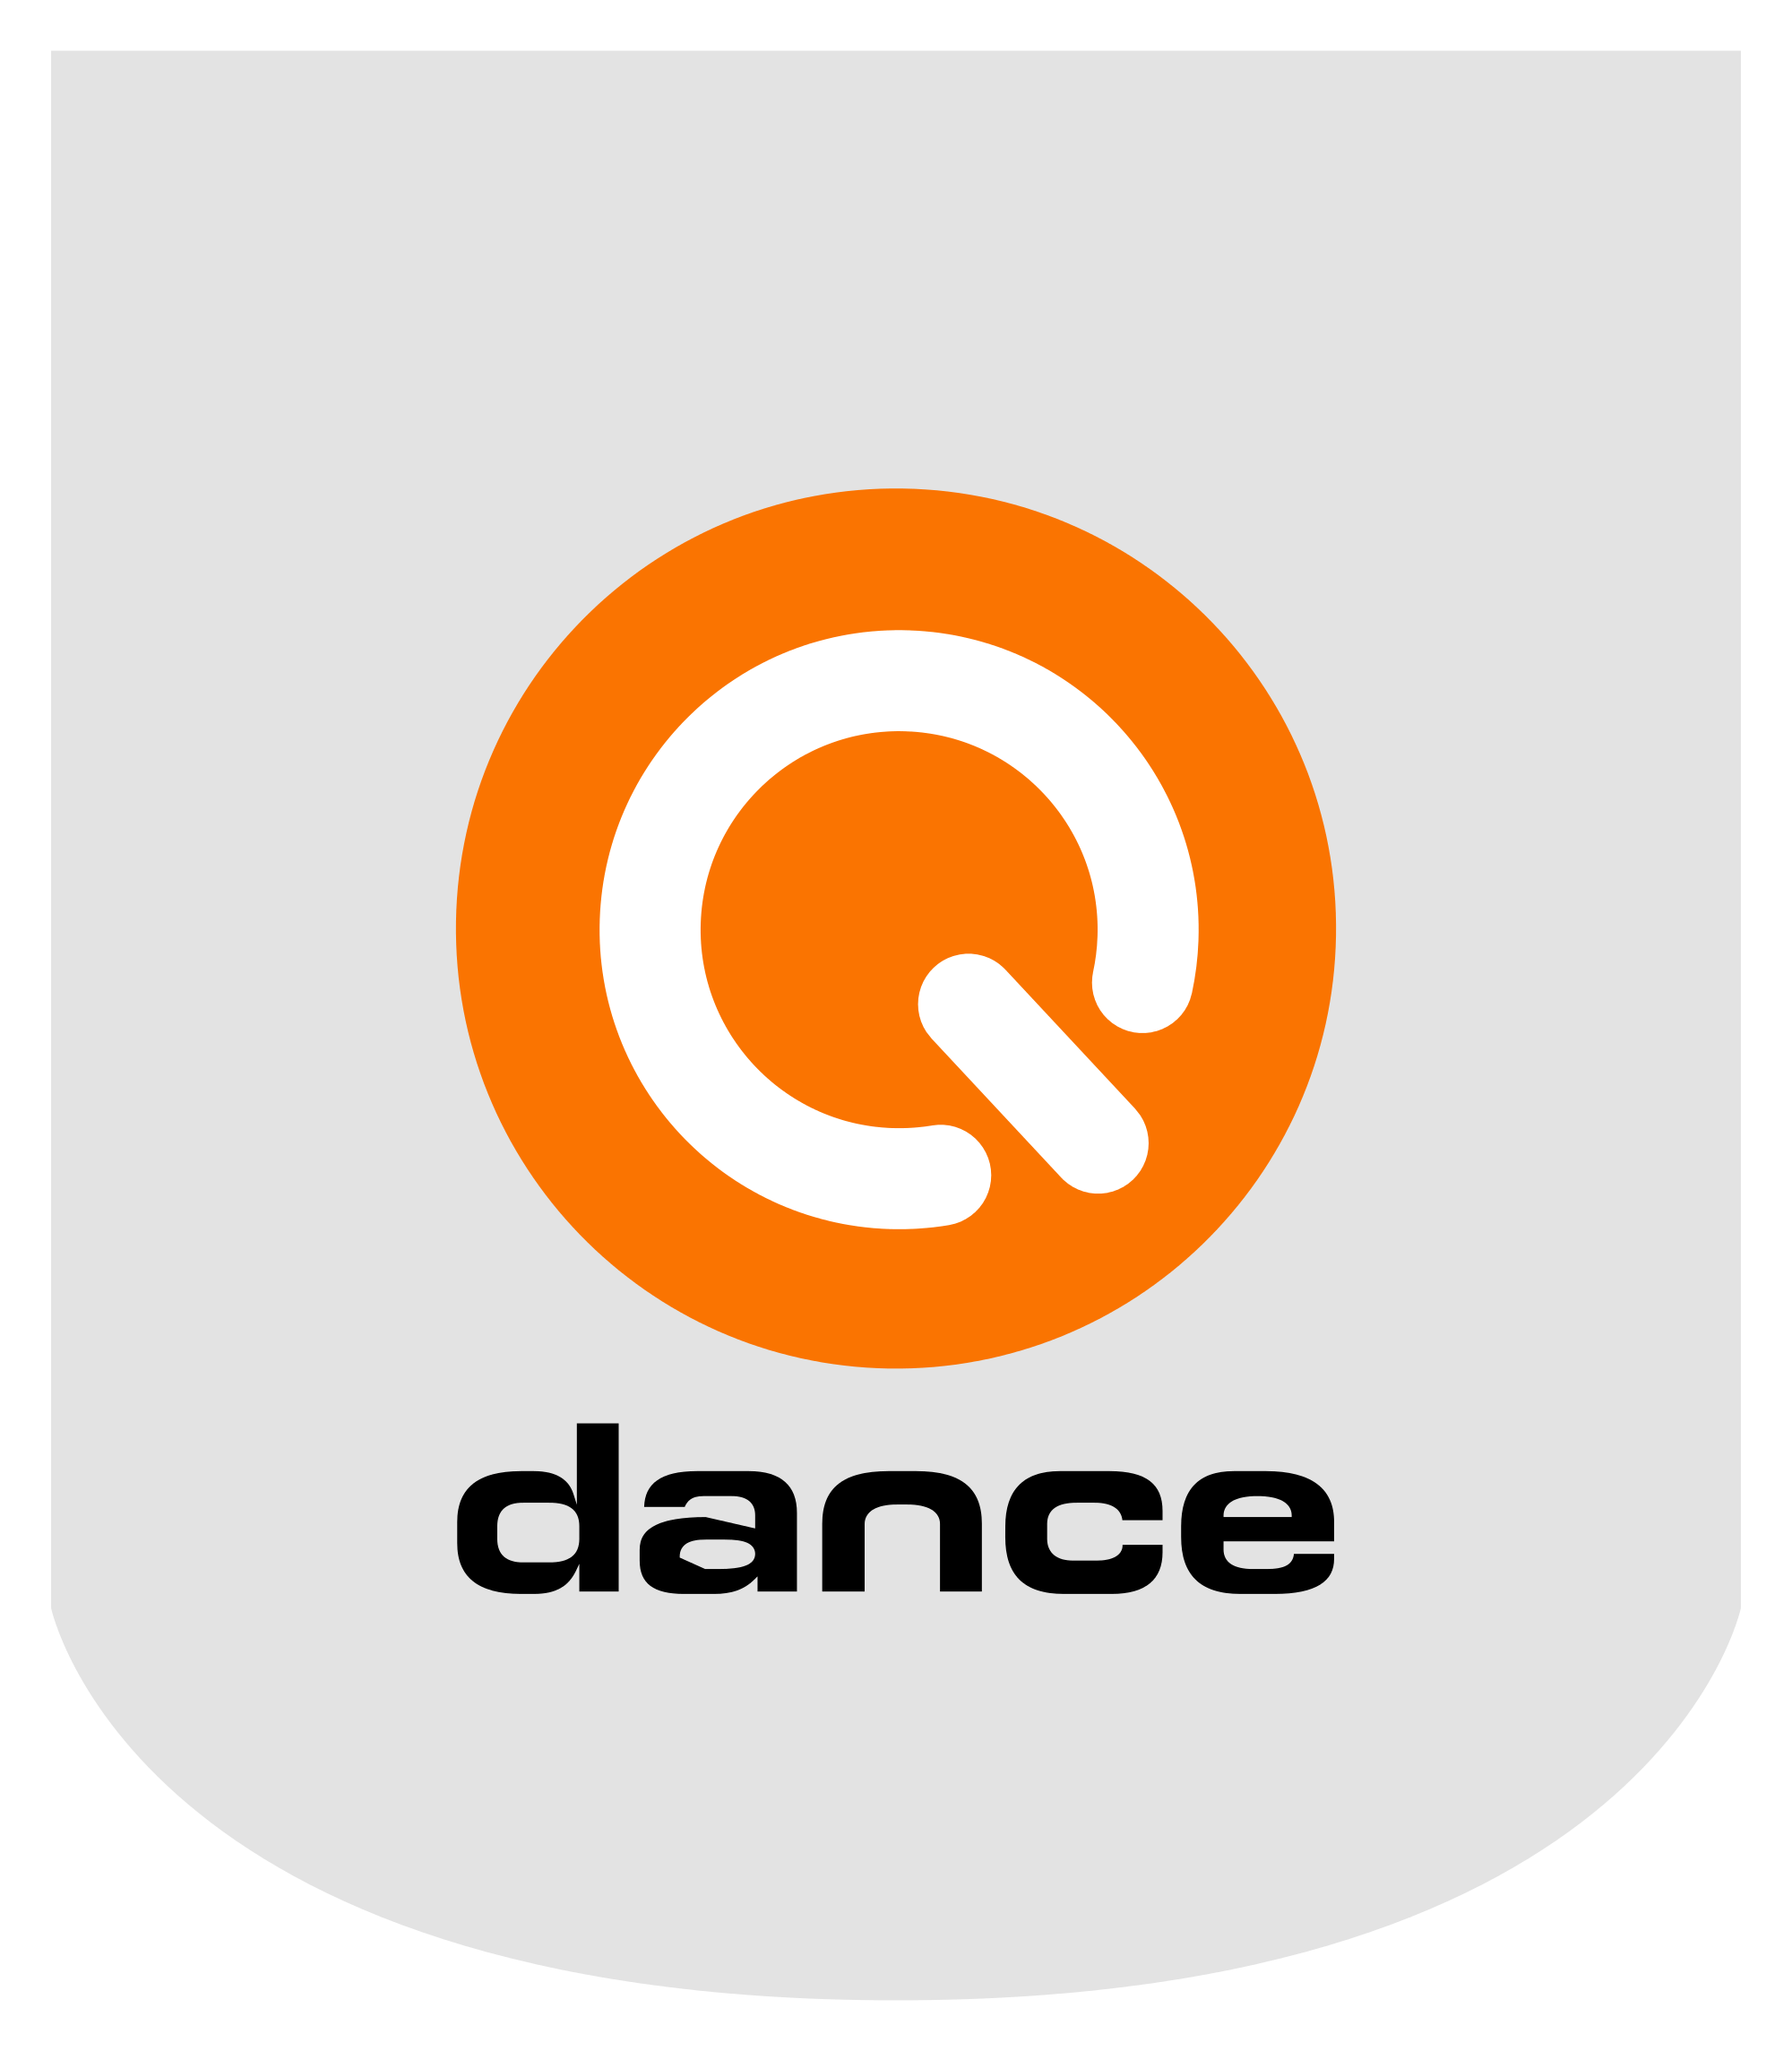 Q Symbol in Logo - Q Dance Logo.svg